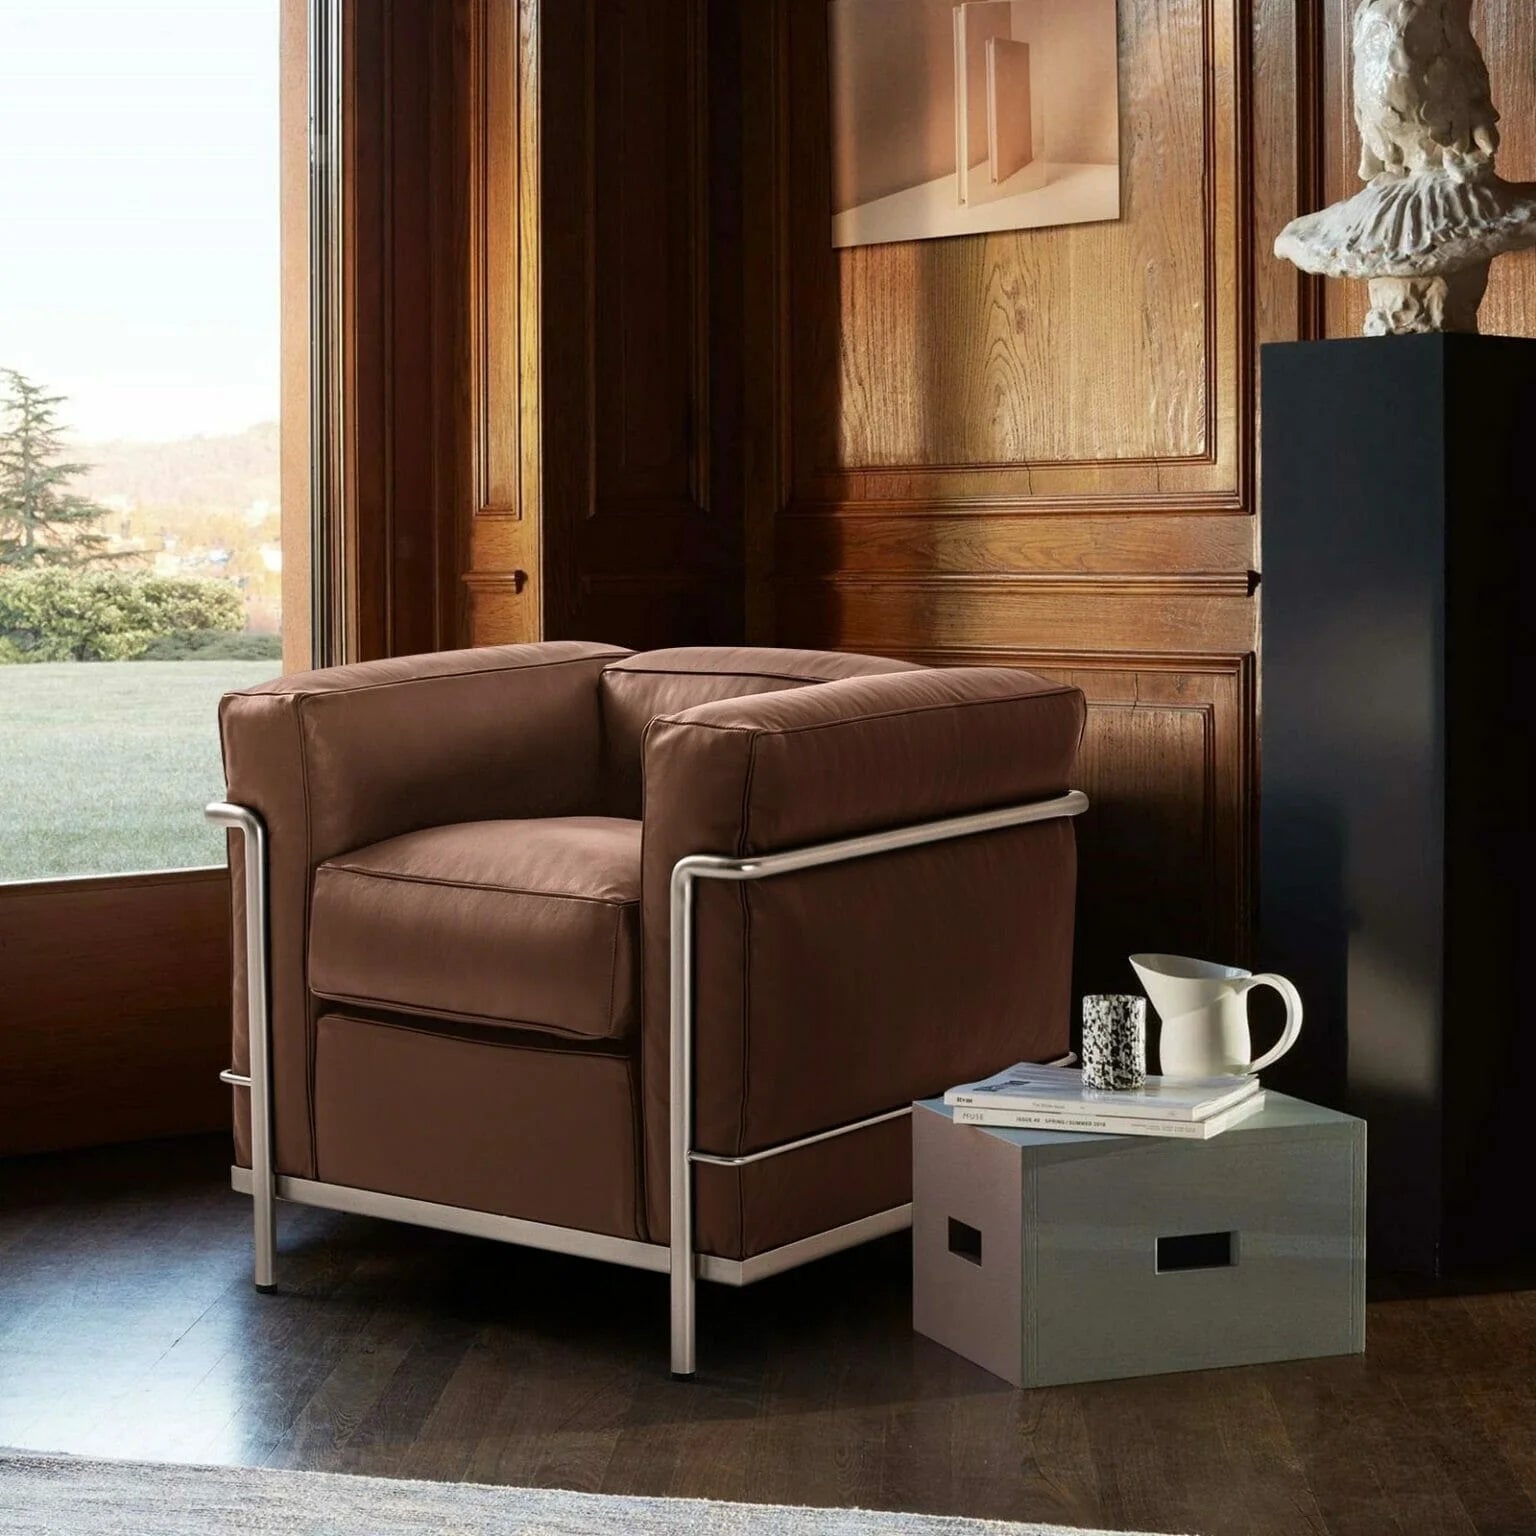 Luxuriance Designs - LC2 Sofa Replica by Le Corbusier | Genuine Italian Leather - Review